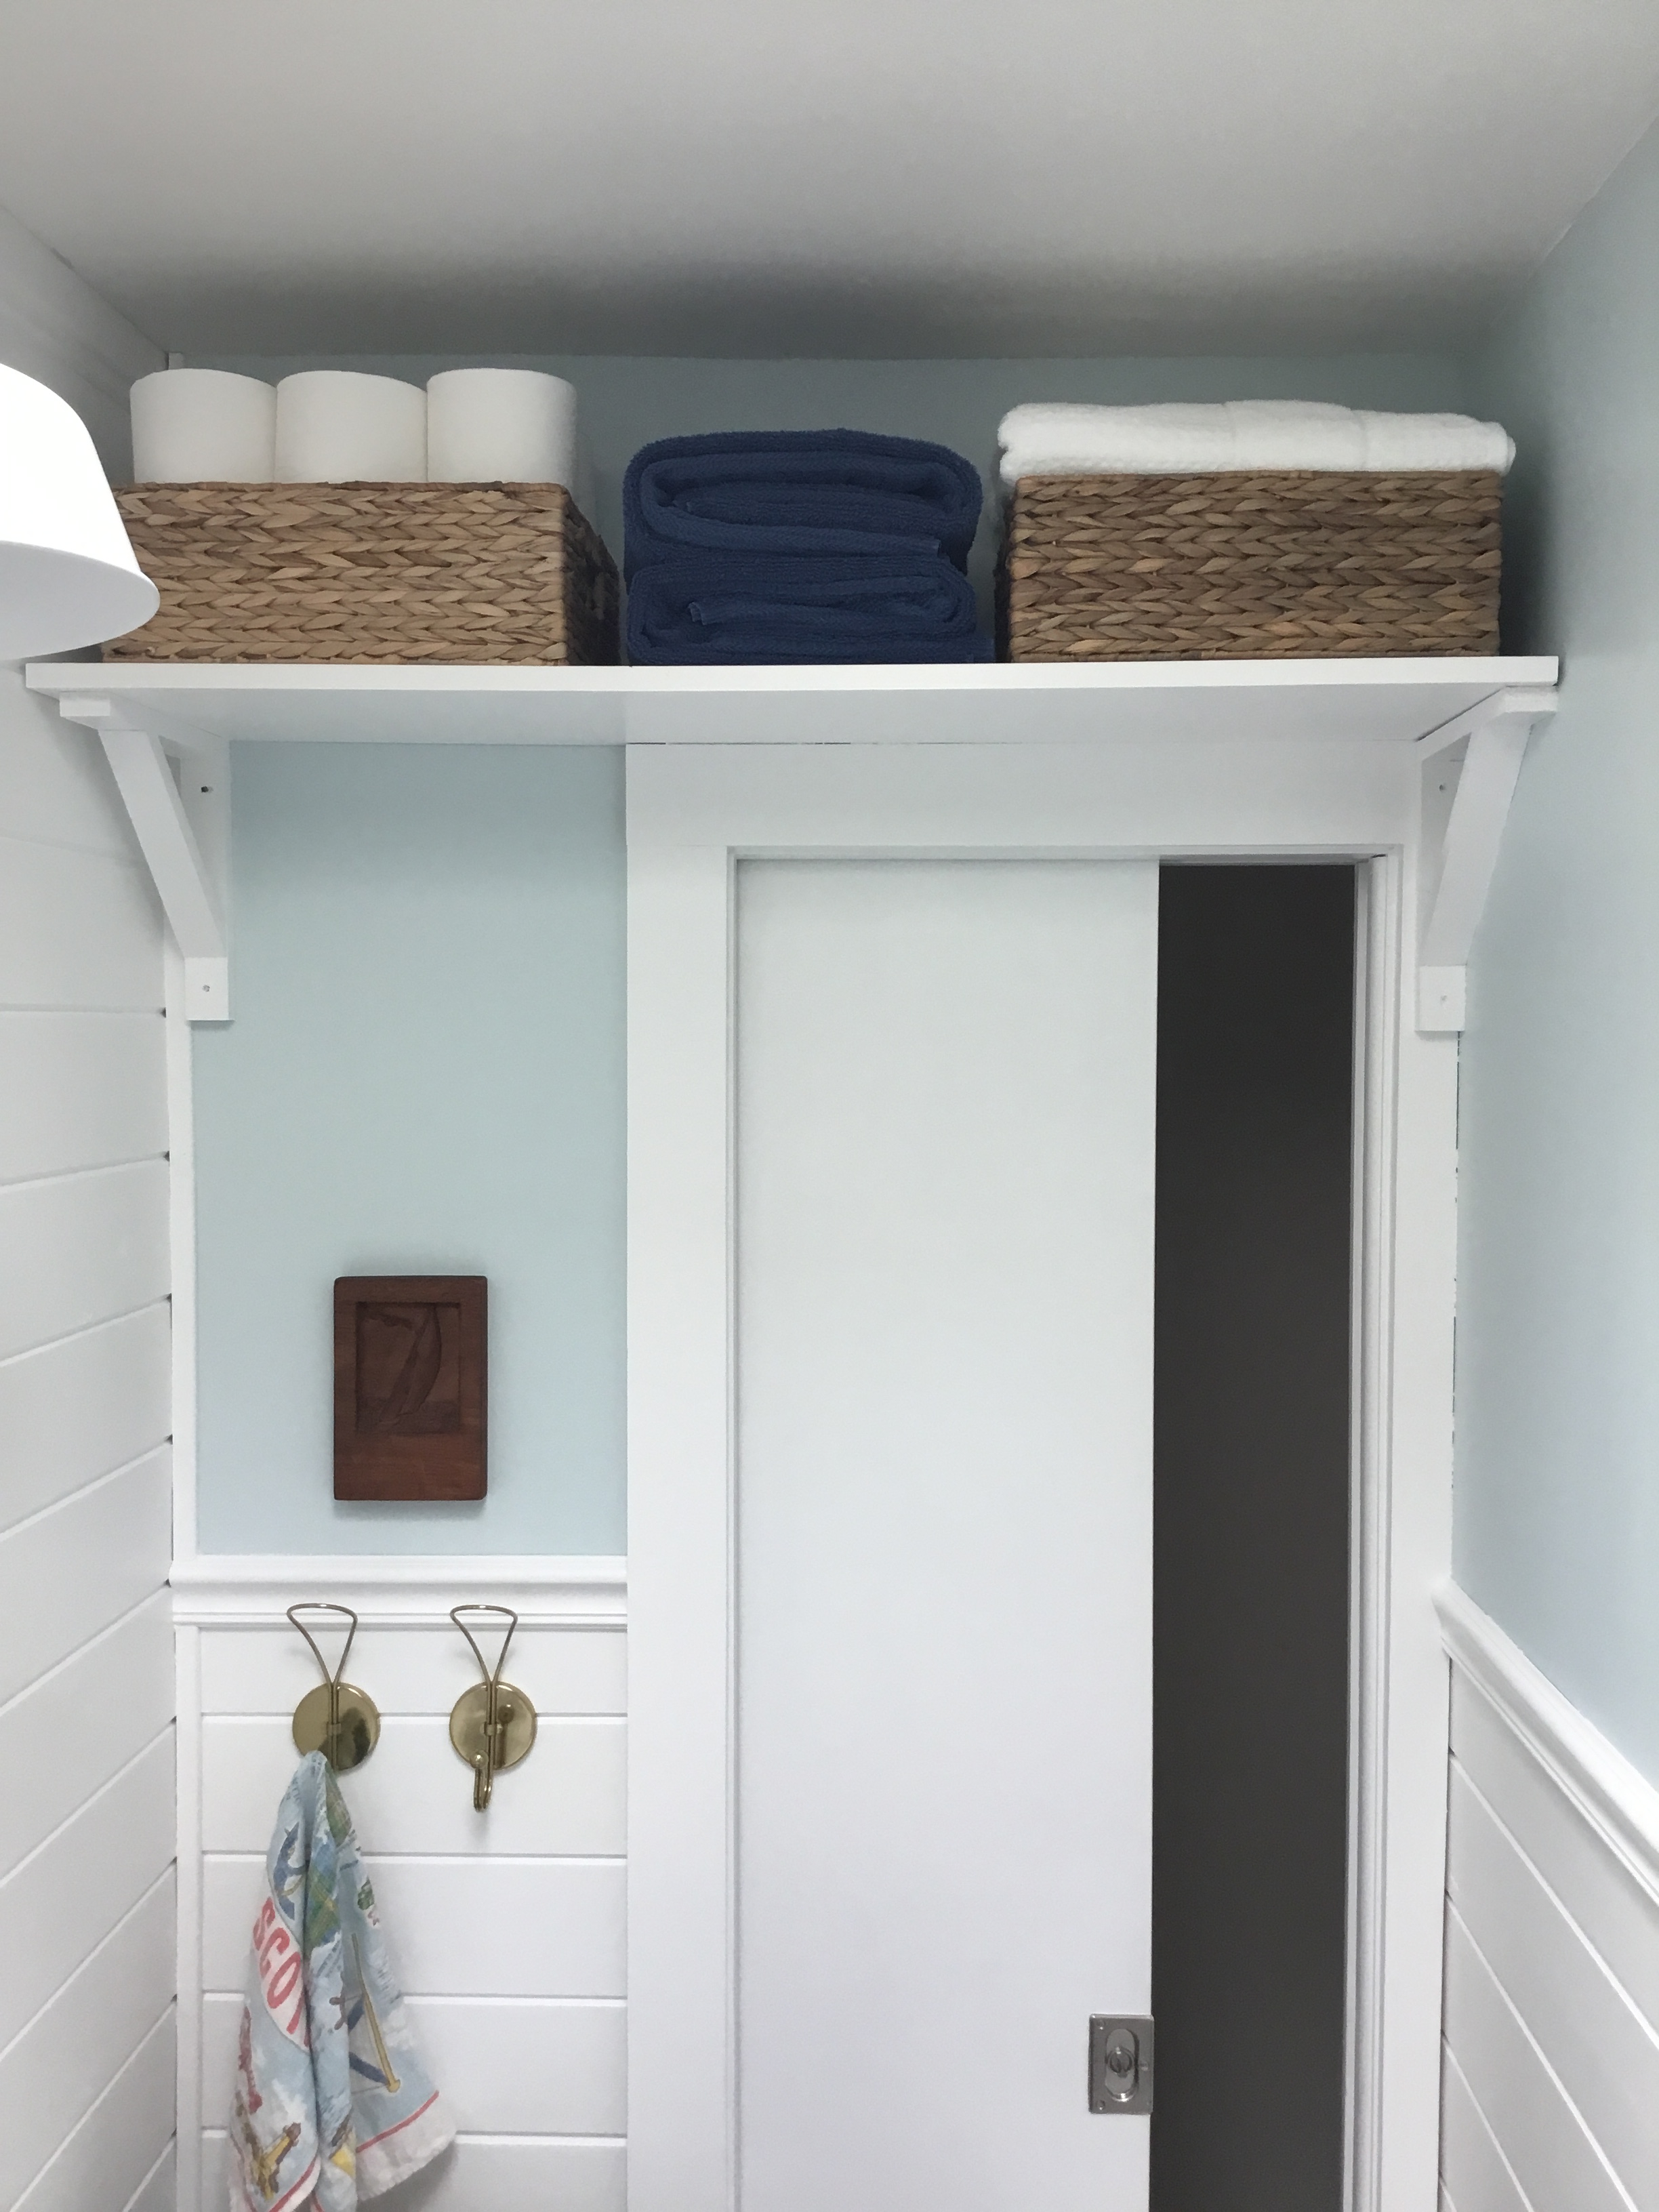 DIY towel and storage shelf above sliding bathroom door